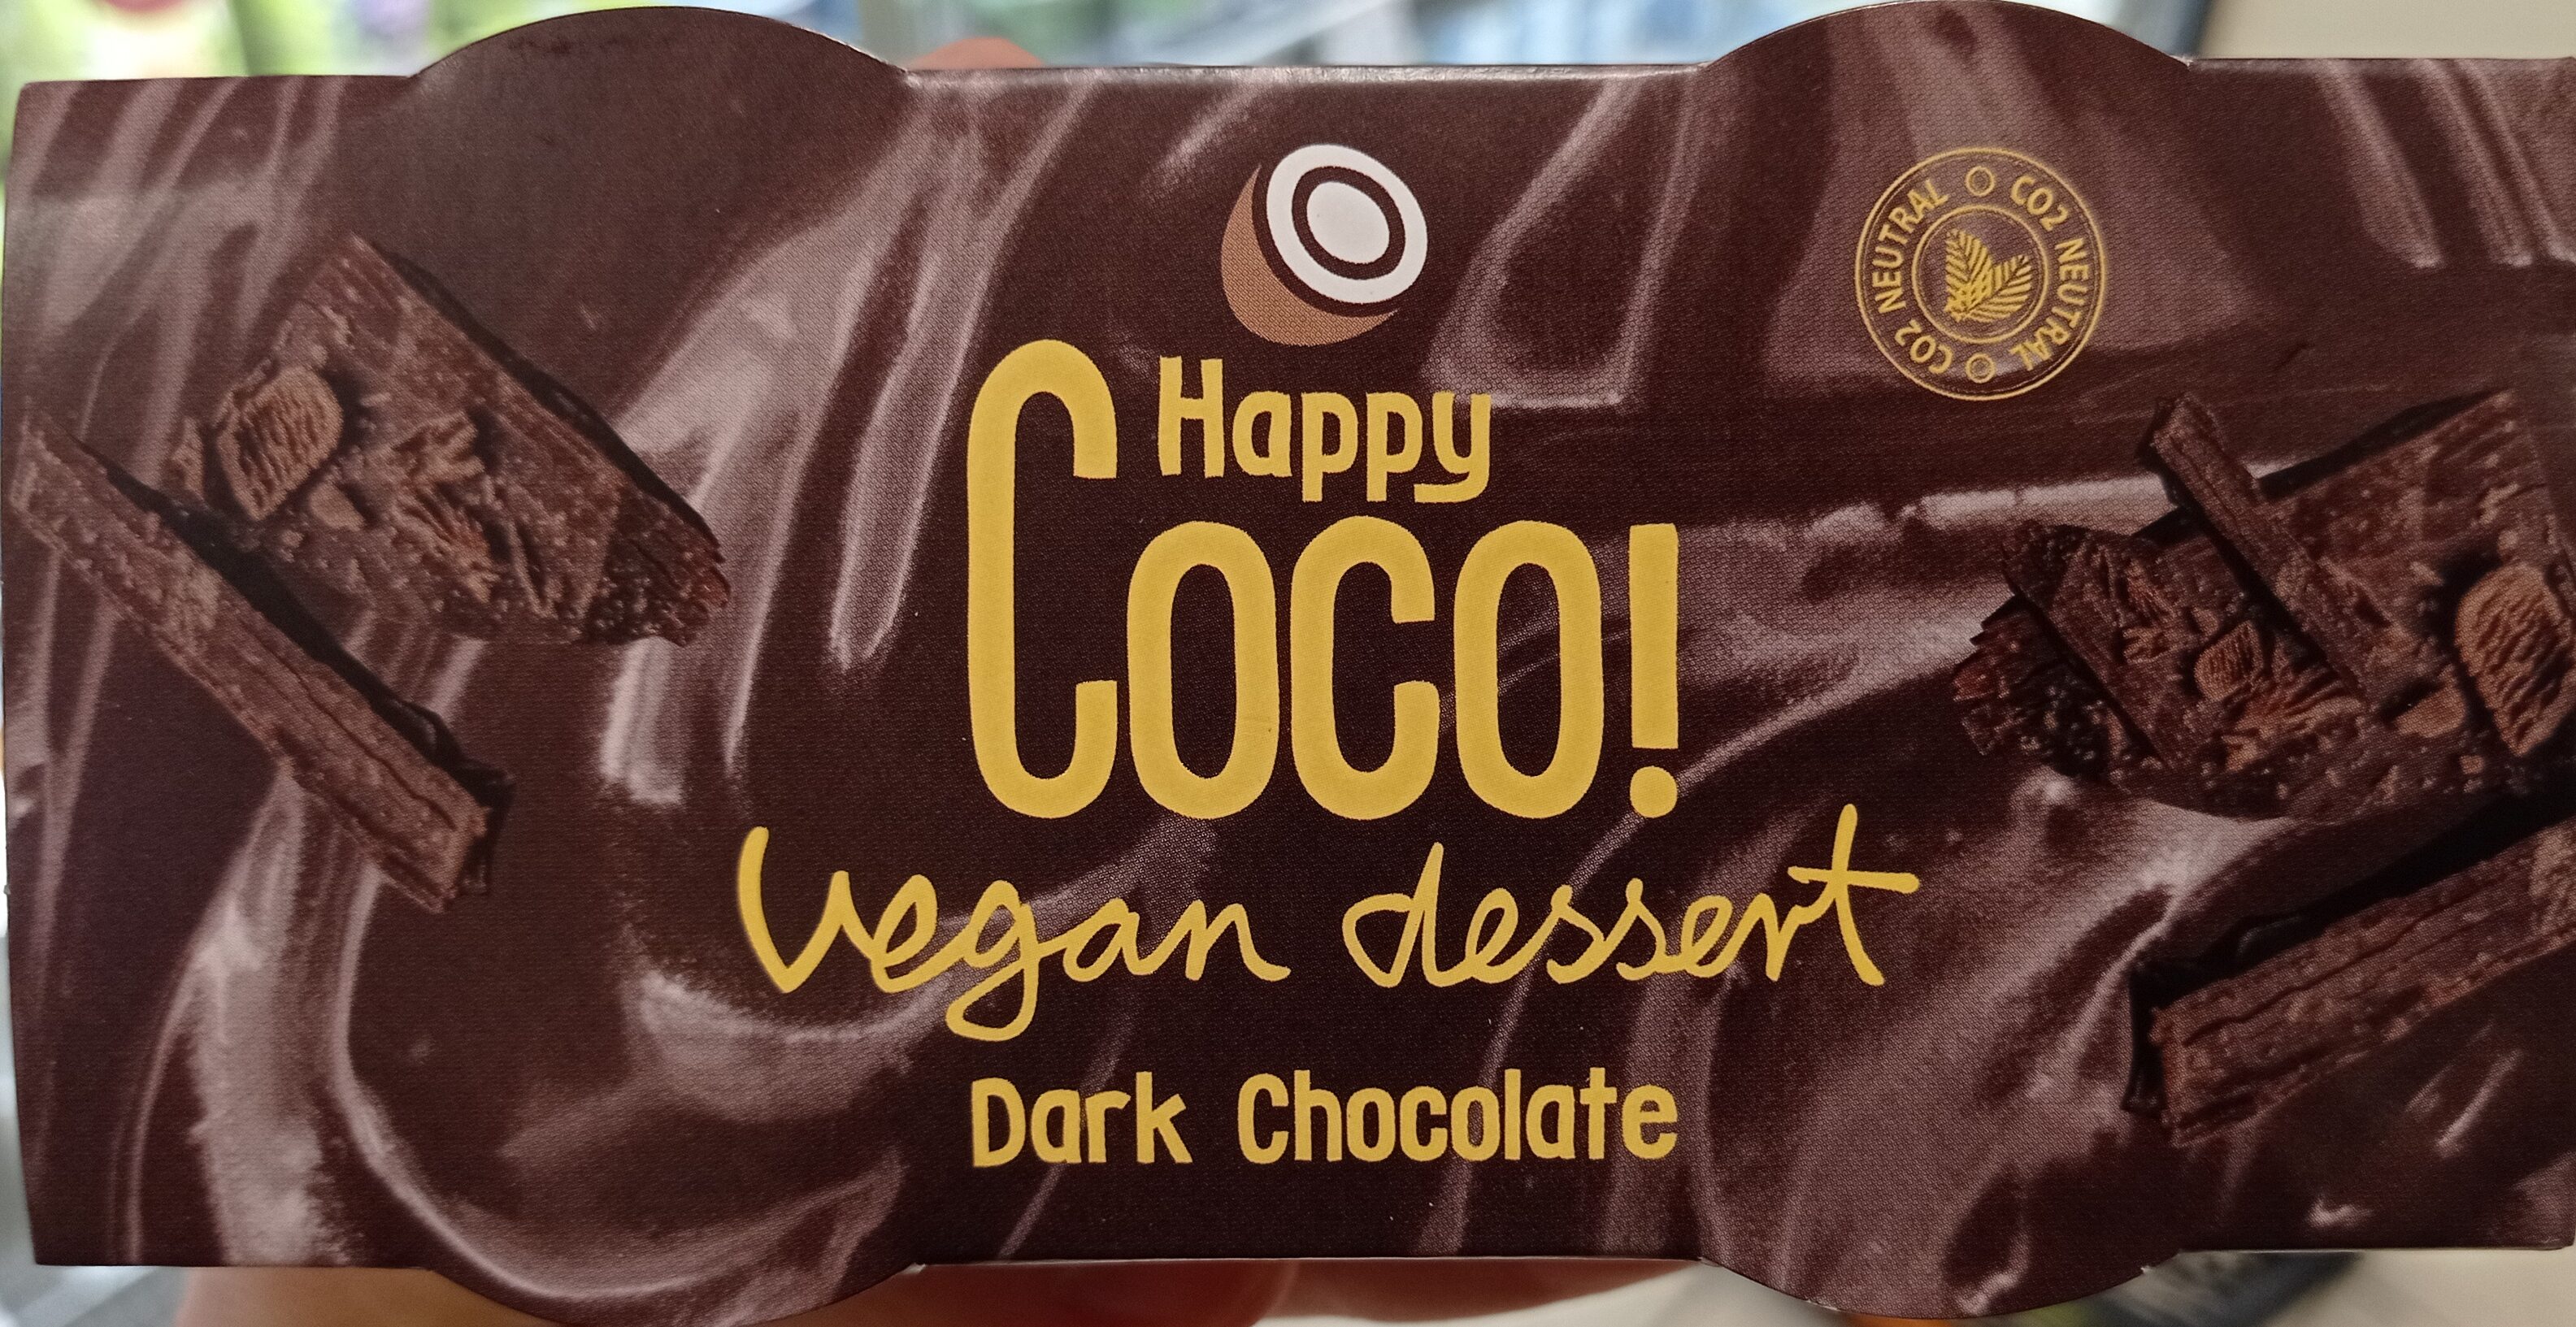 Vegan dessert dark chocolate - Produkt